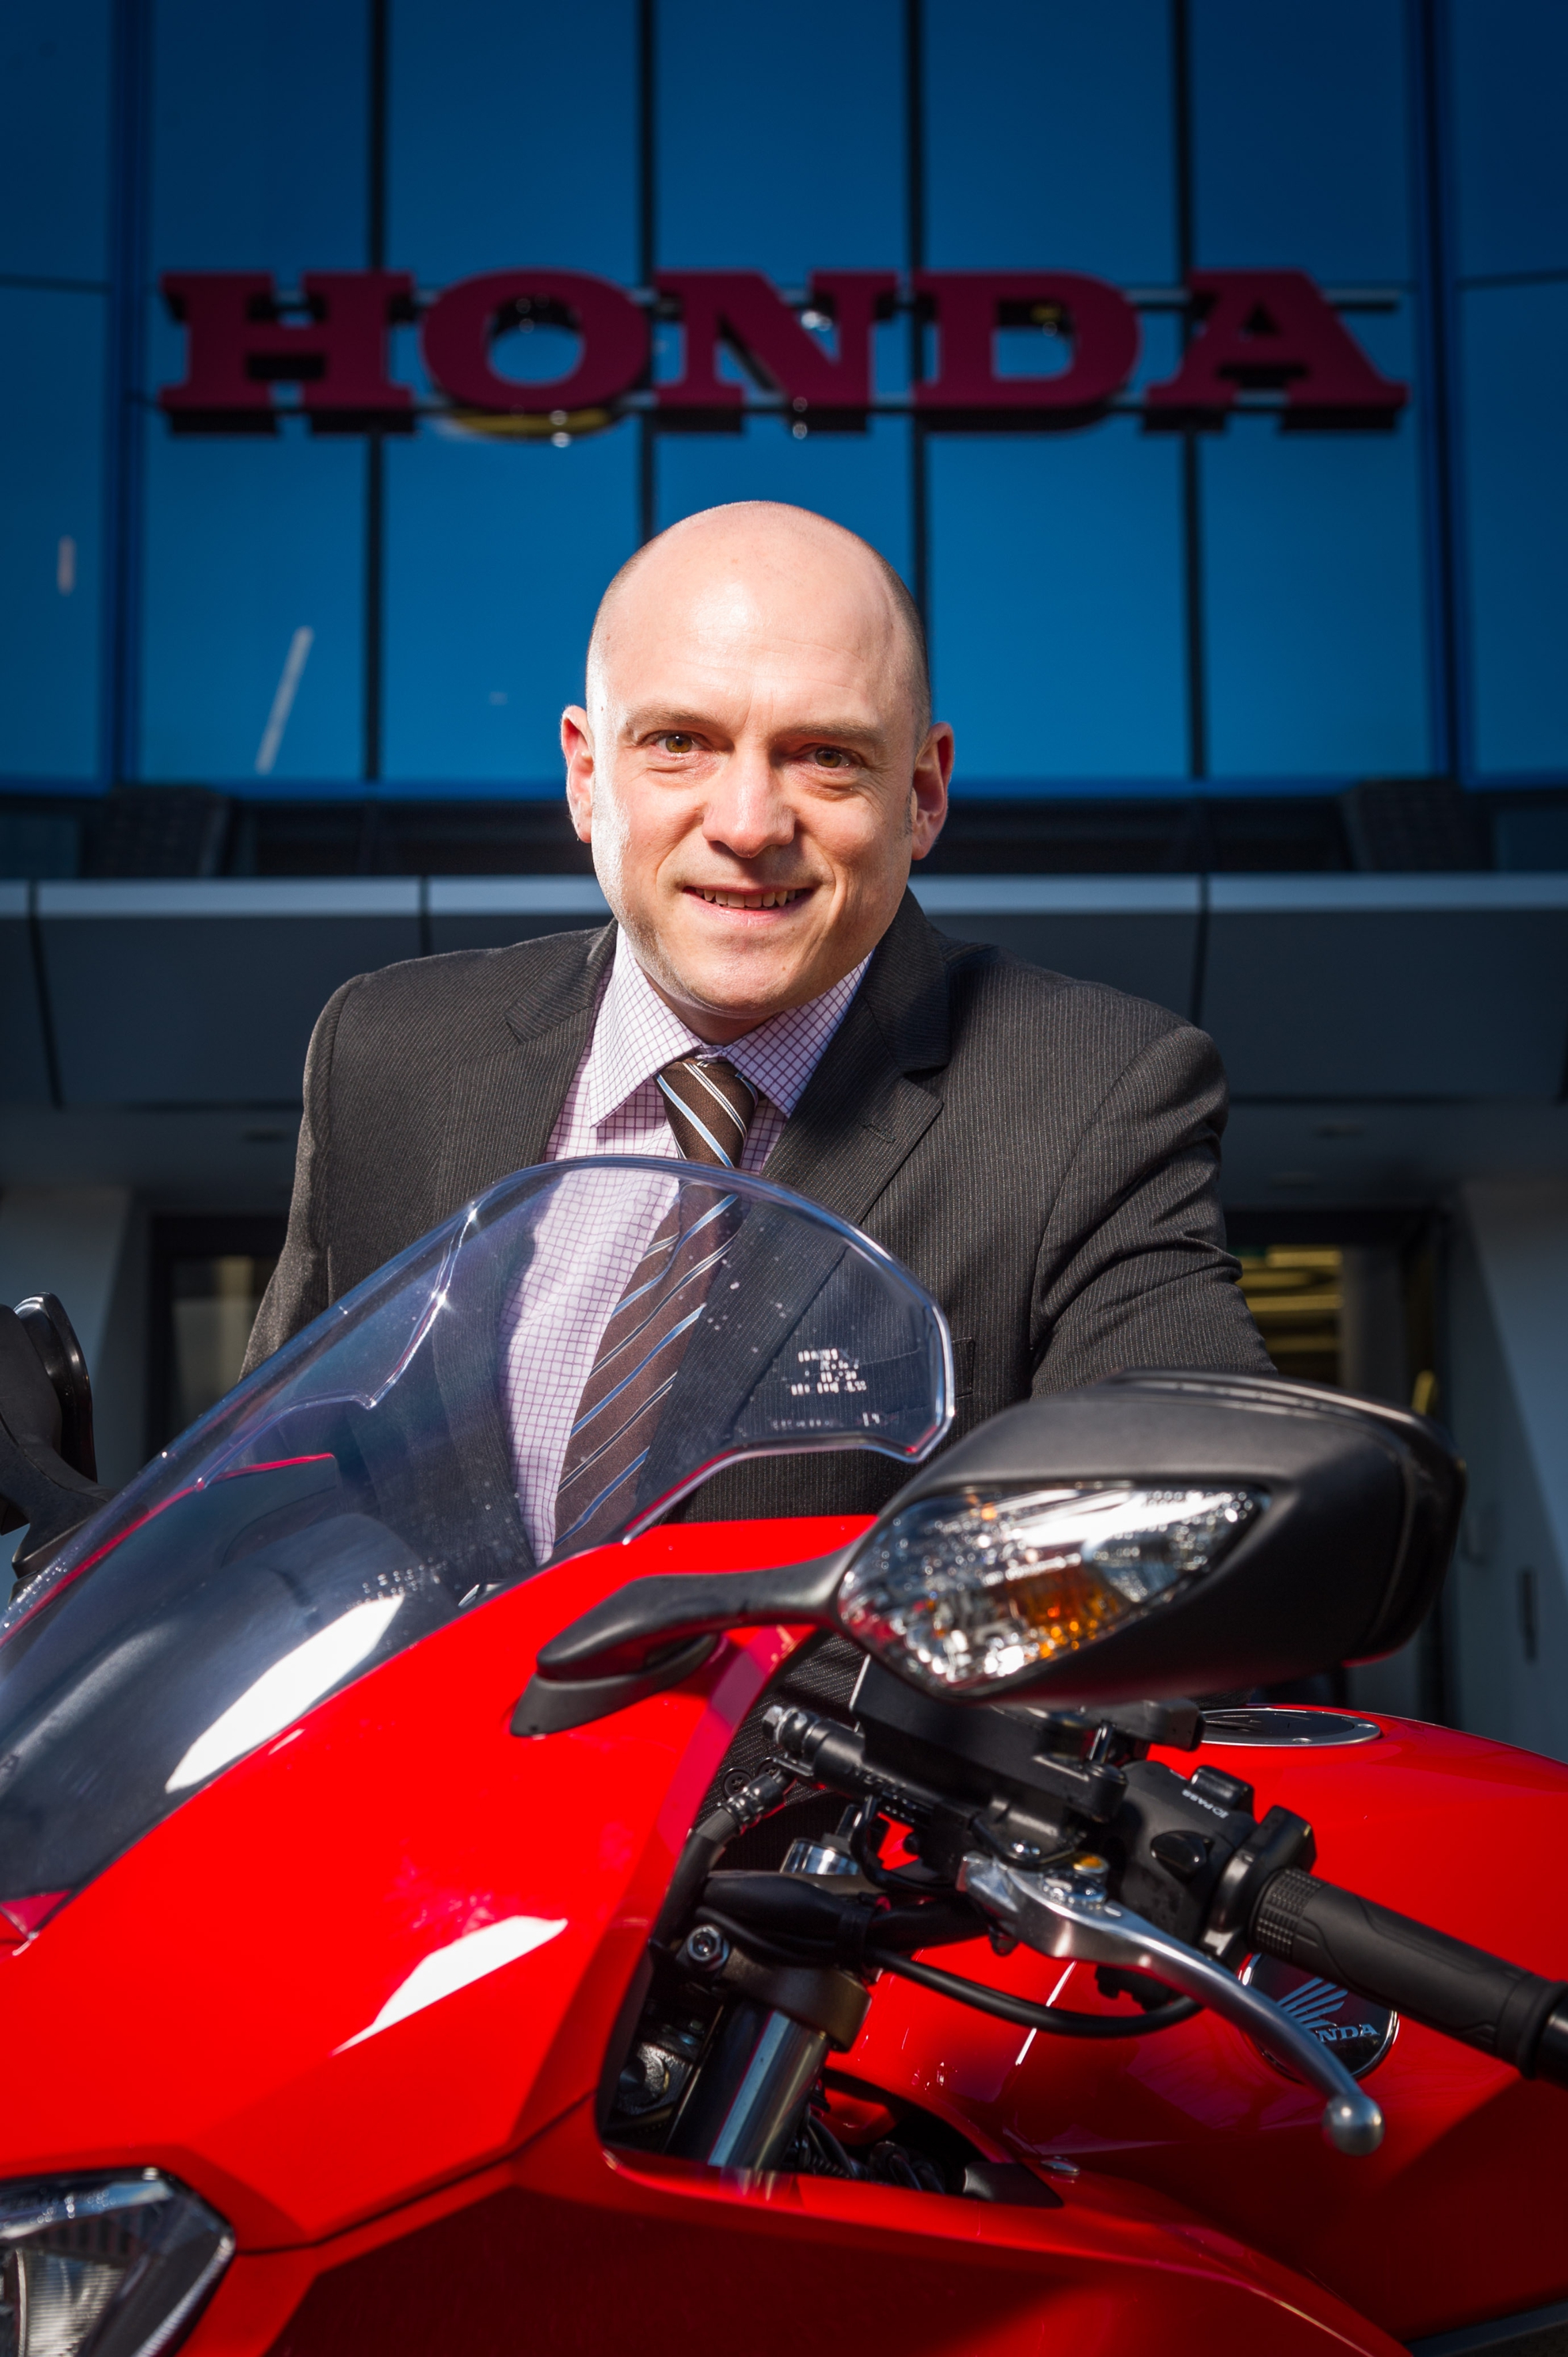 David Rogers, Motorcycle PR communications manager, Honda UK